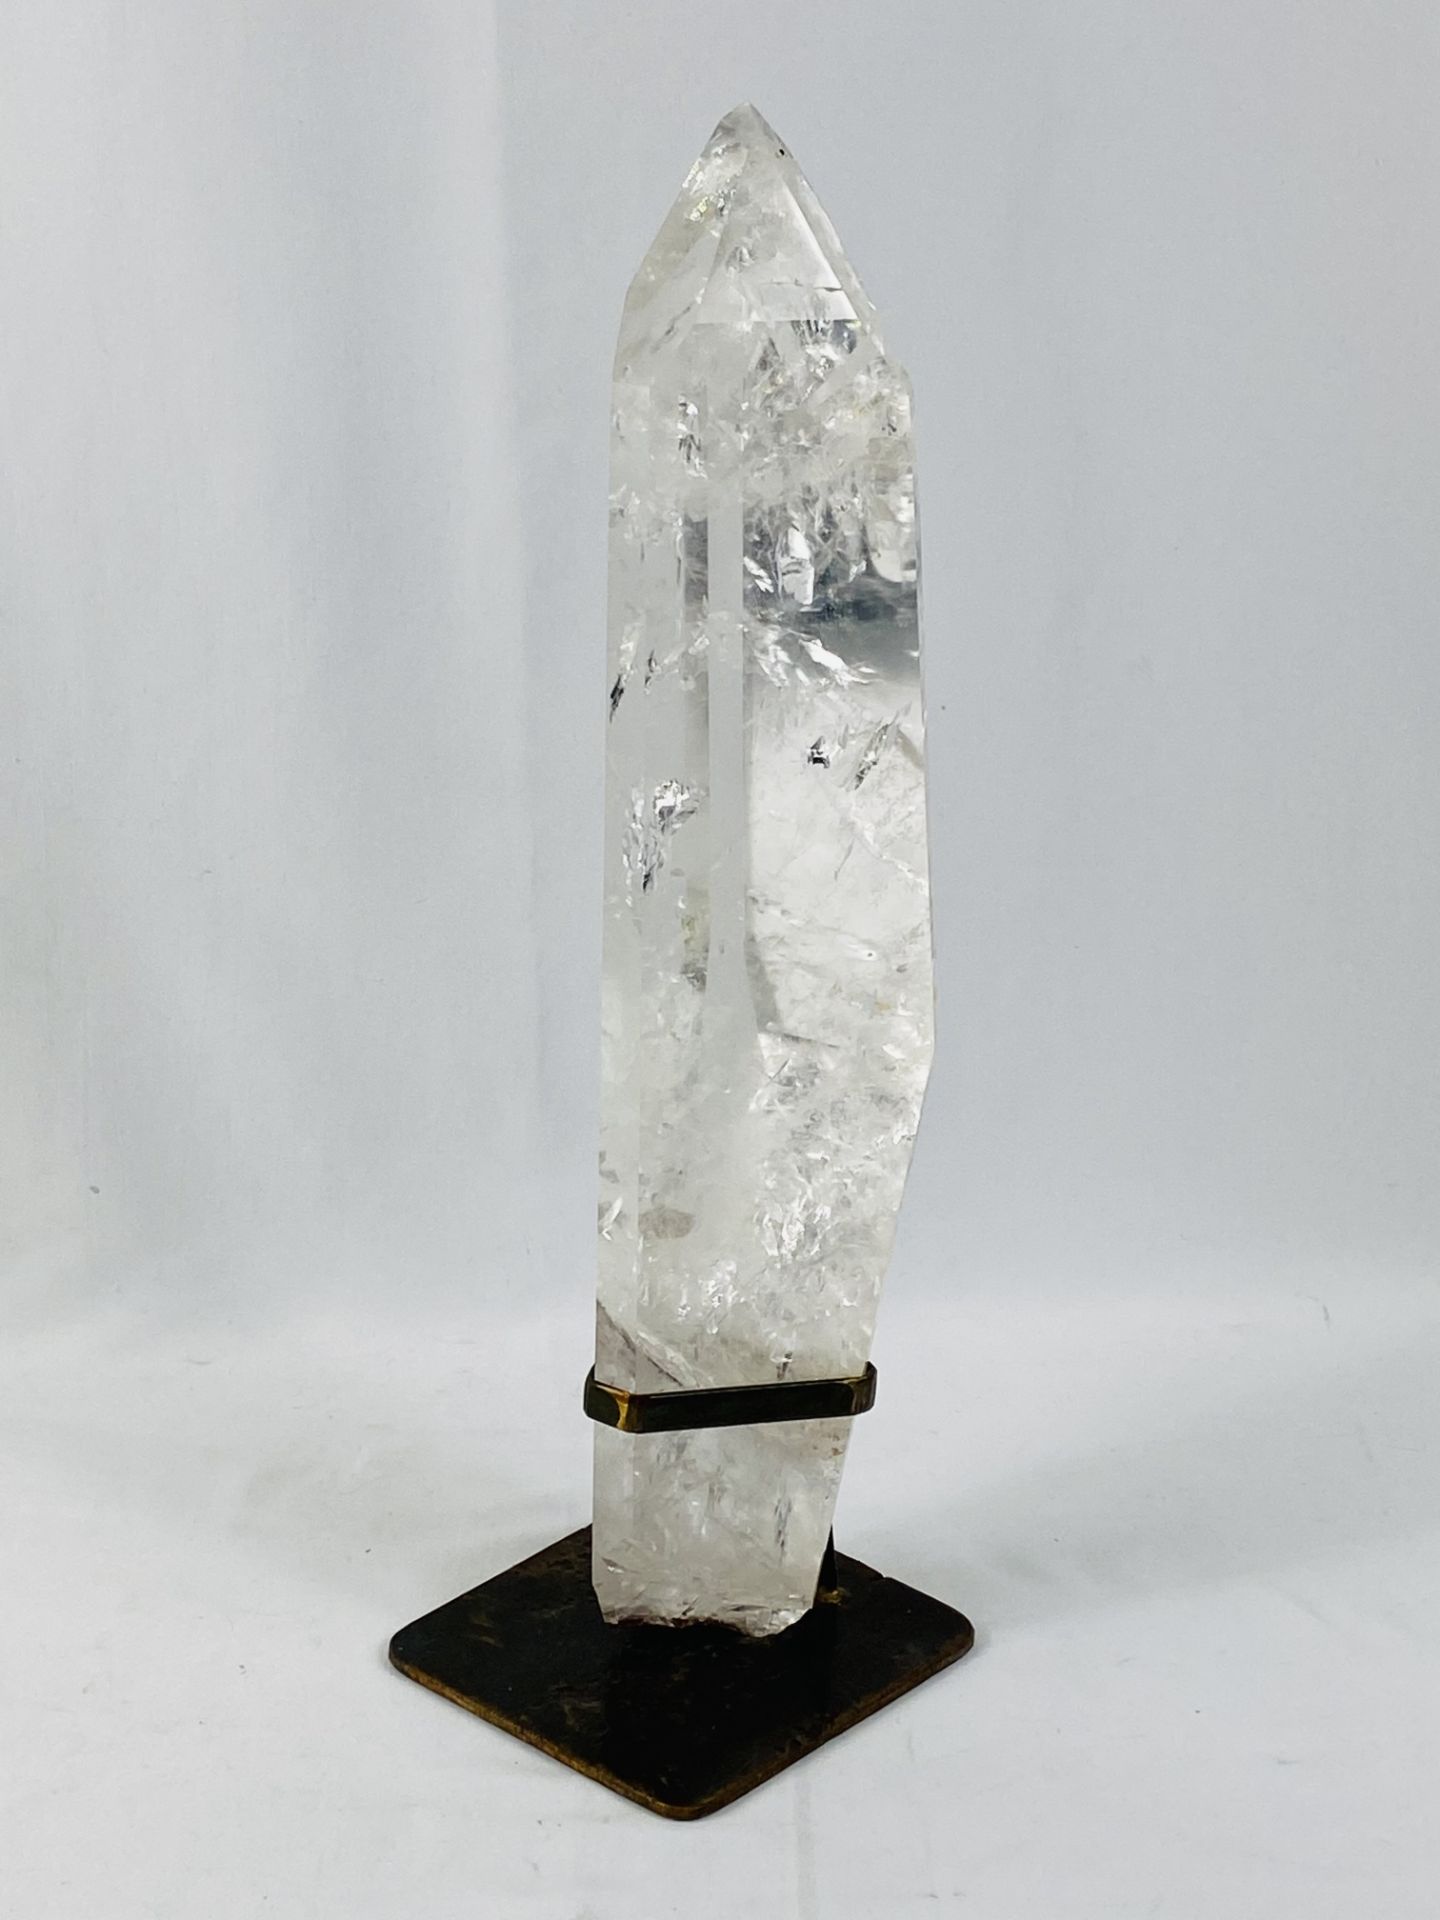 Polished rock crystal mounted in metal base